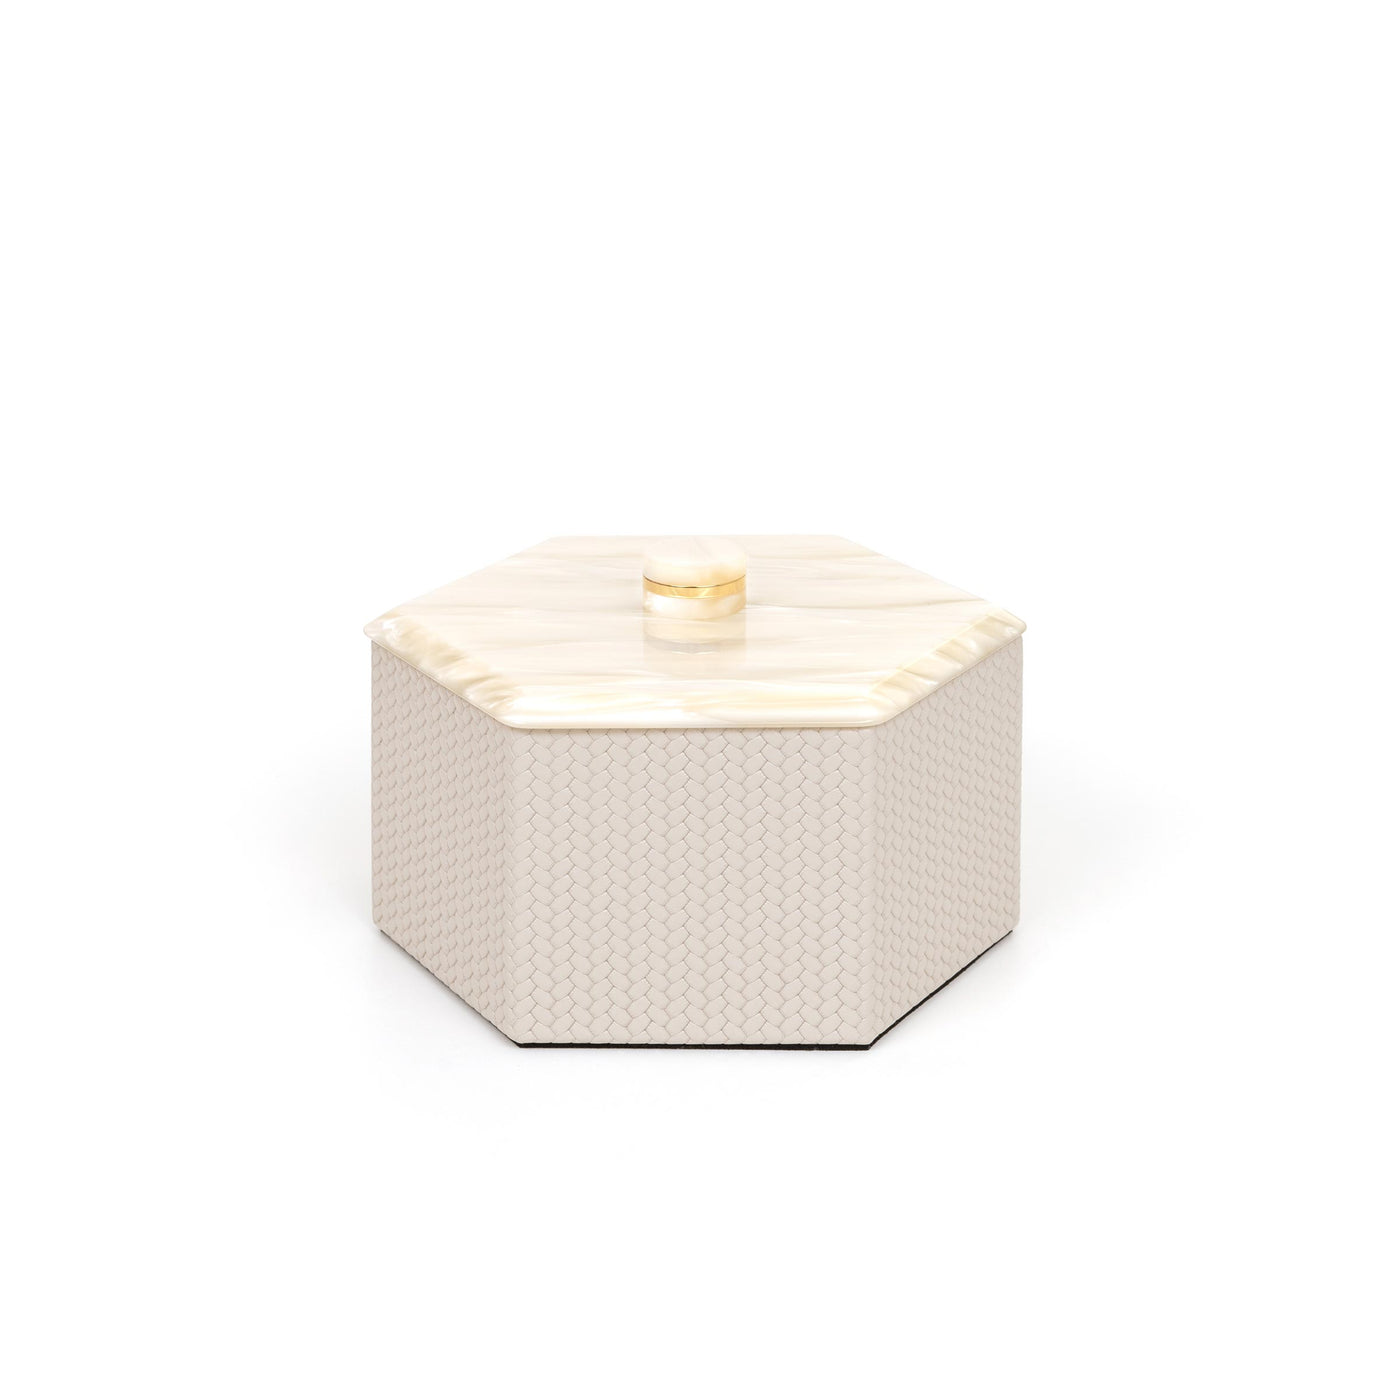 Leather Hexagonal Box KELLY by Pinetti 01